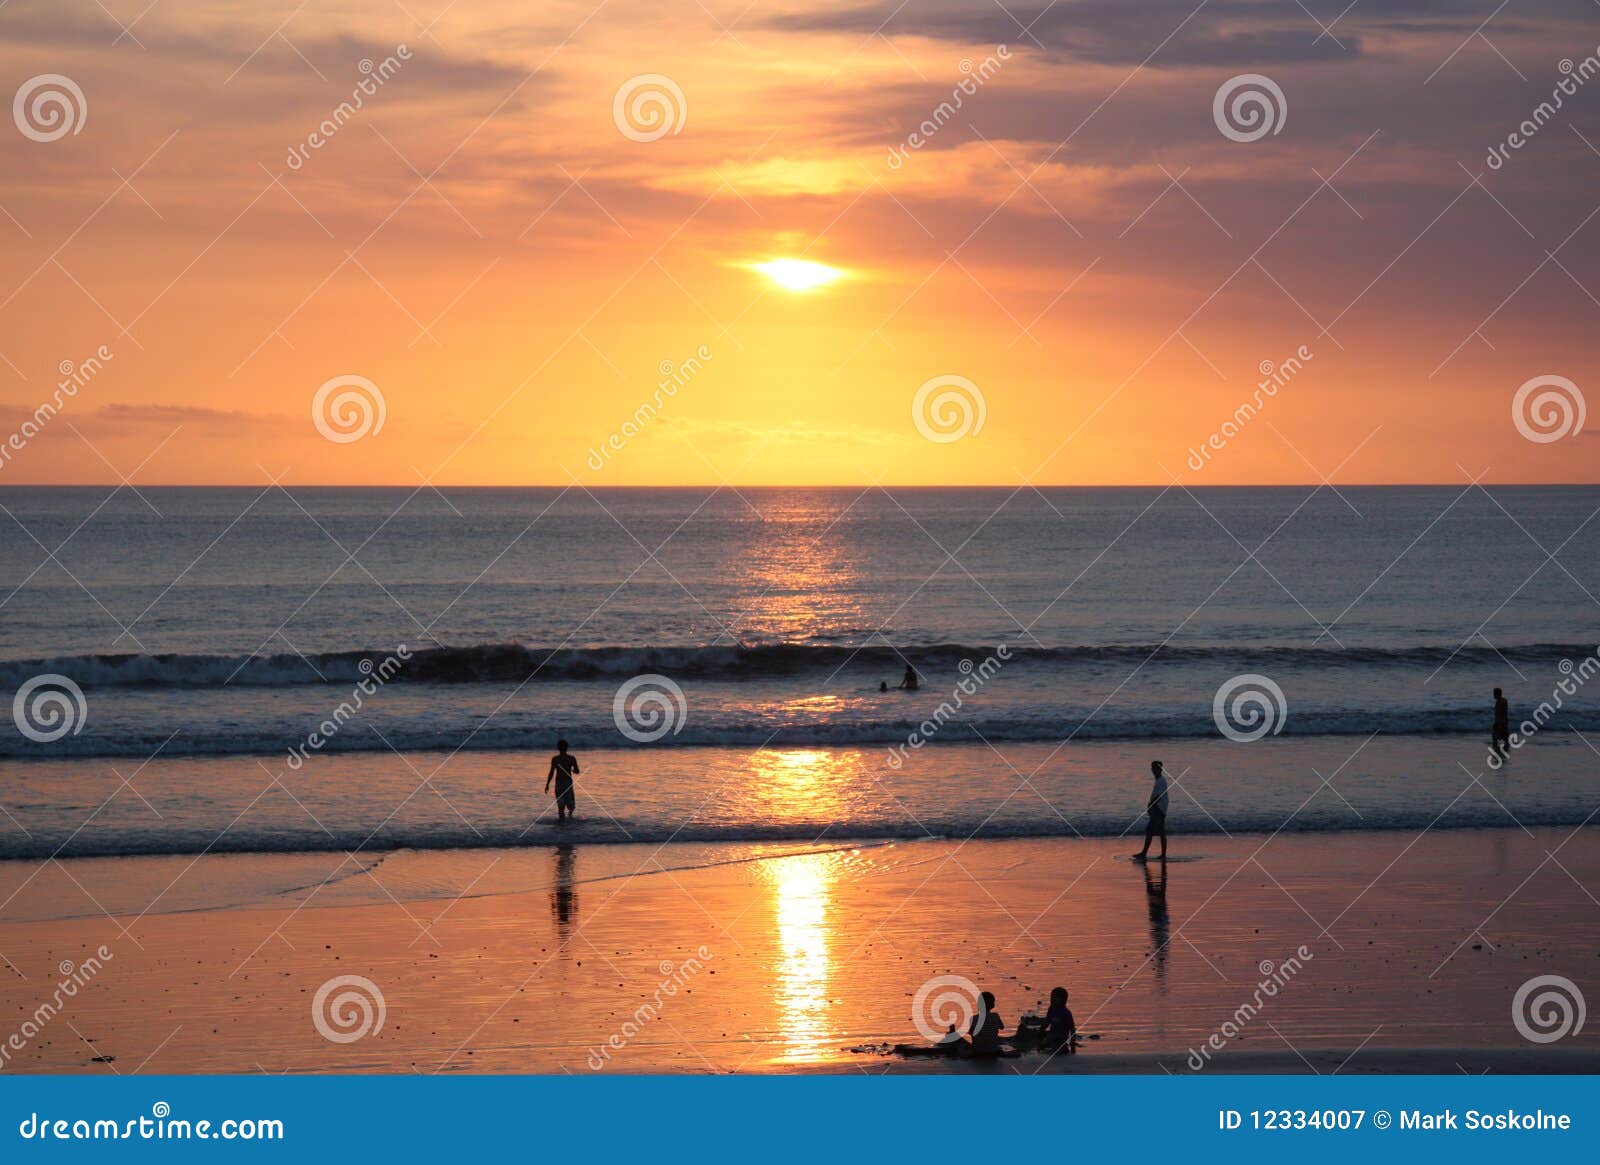 Thailand Sunset stock image. Image of people, beautiful - 12334007